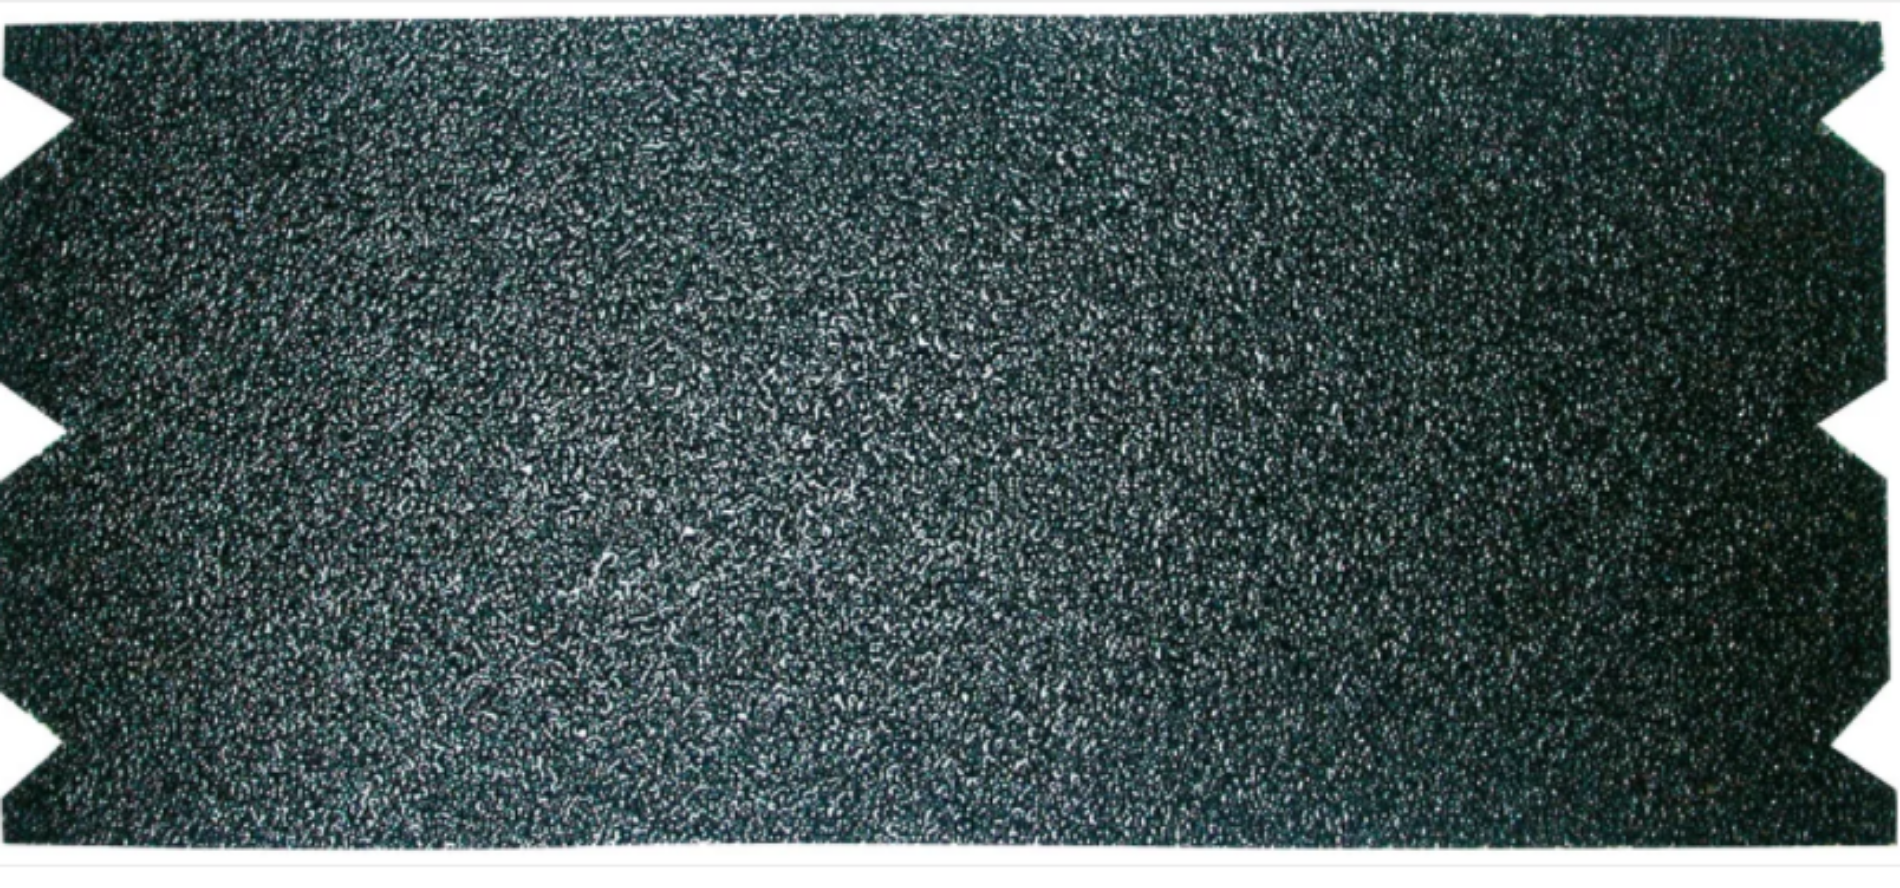 Picture of Makita Abrasive Floor Sander Sheet 60G (203mm x 476mm)